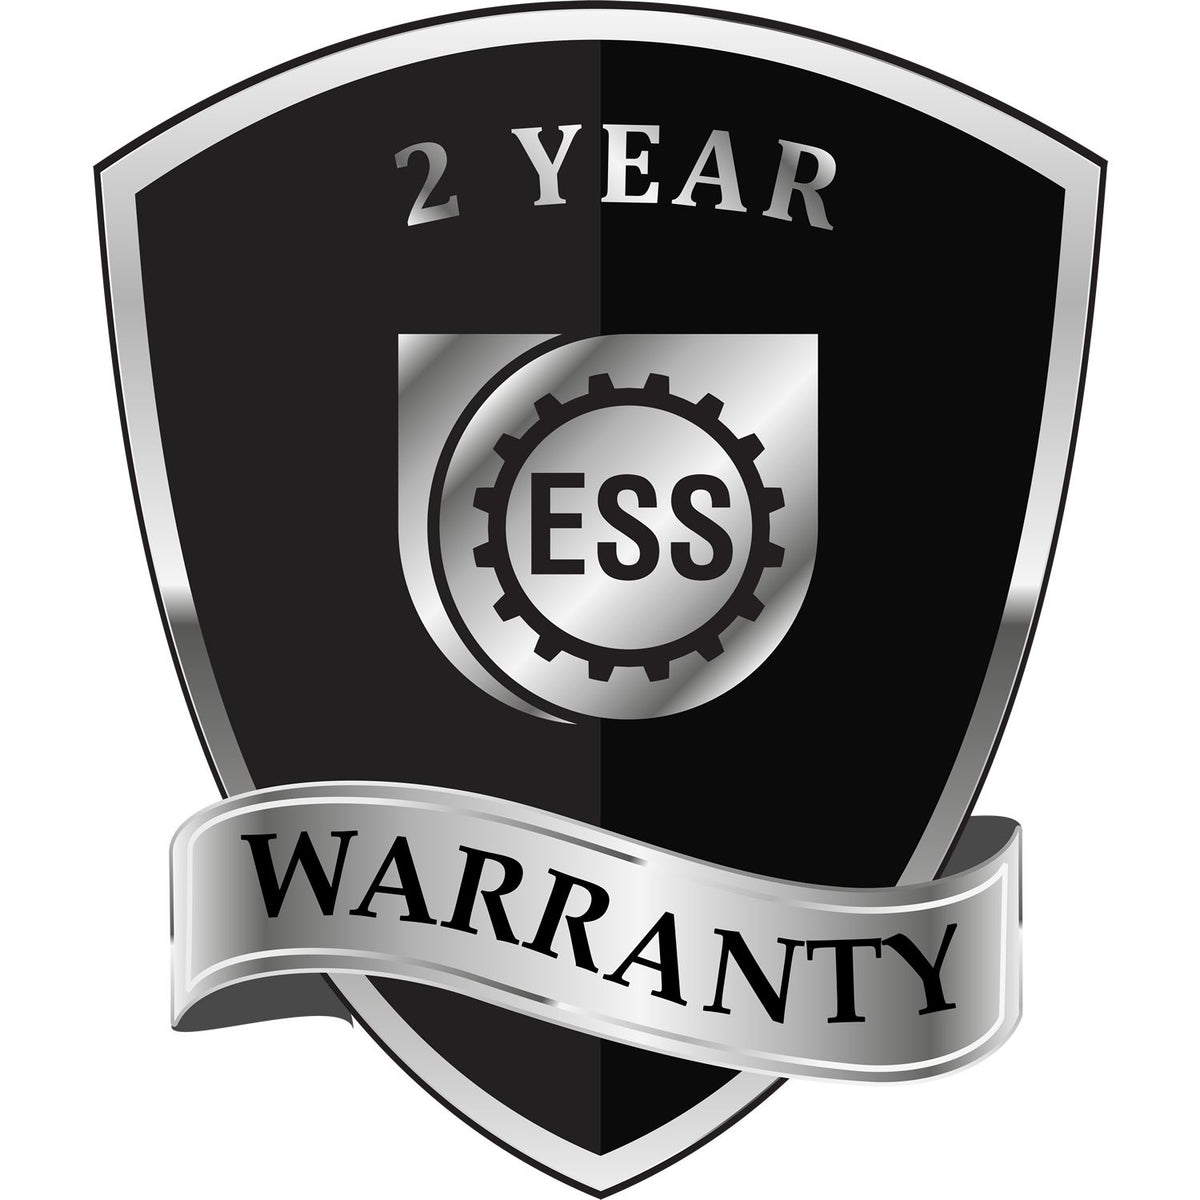 A badge or emblem showing a warranty icon for the Handheld Kansas Land Surveyor Seal